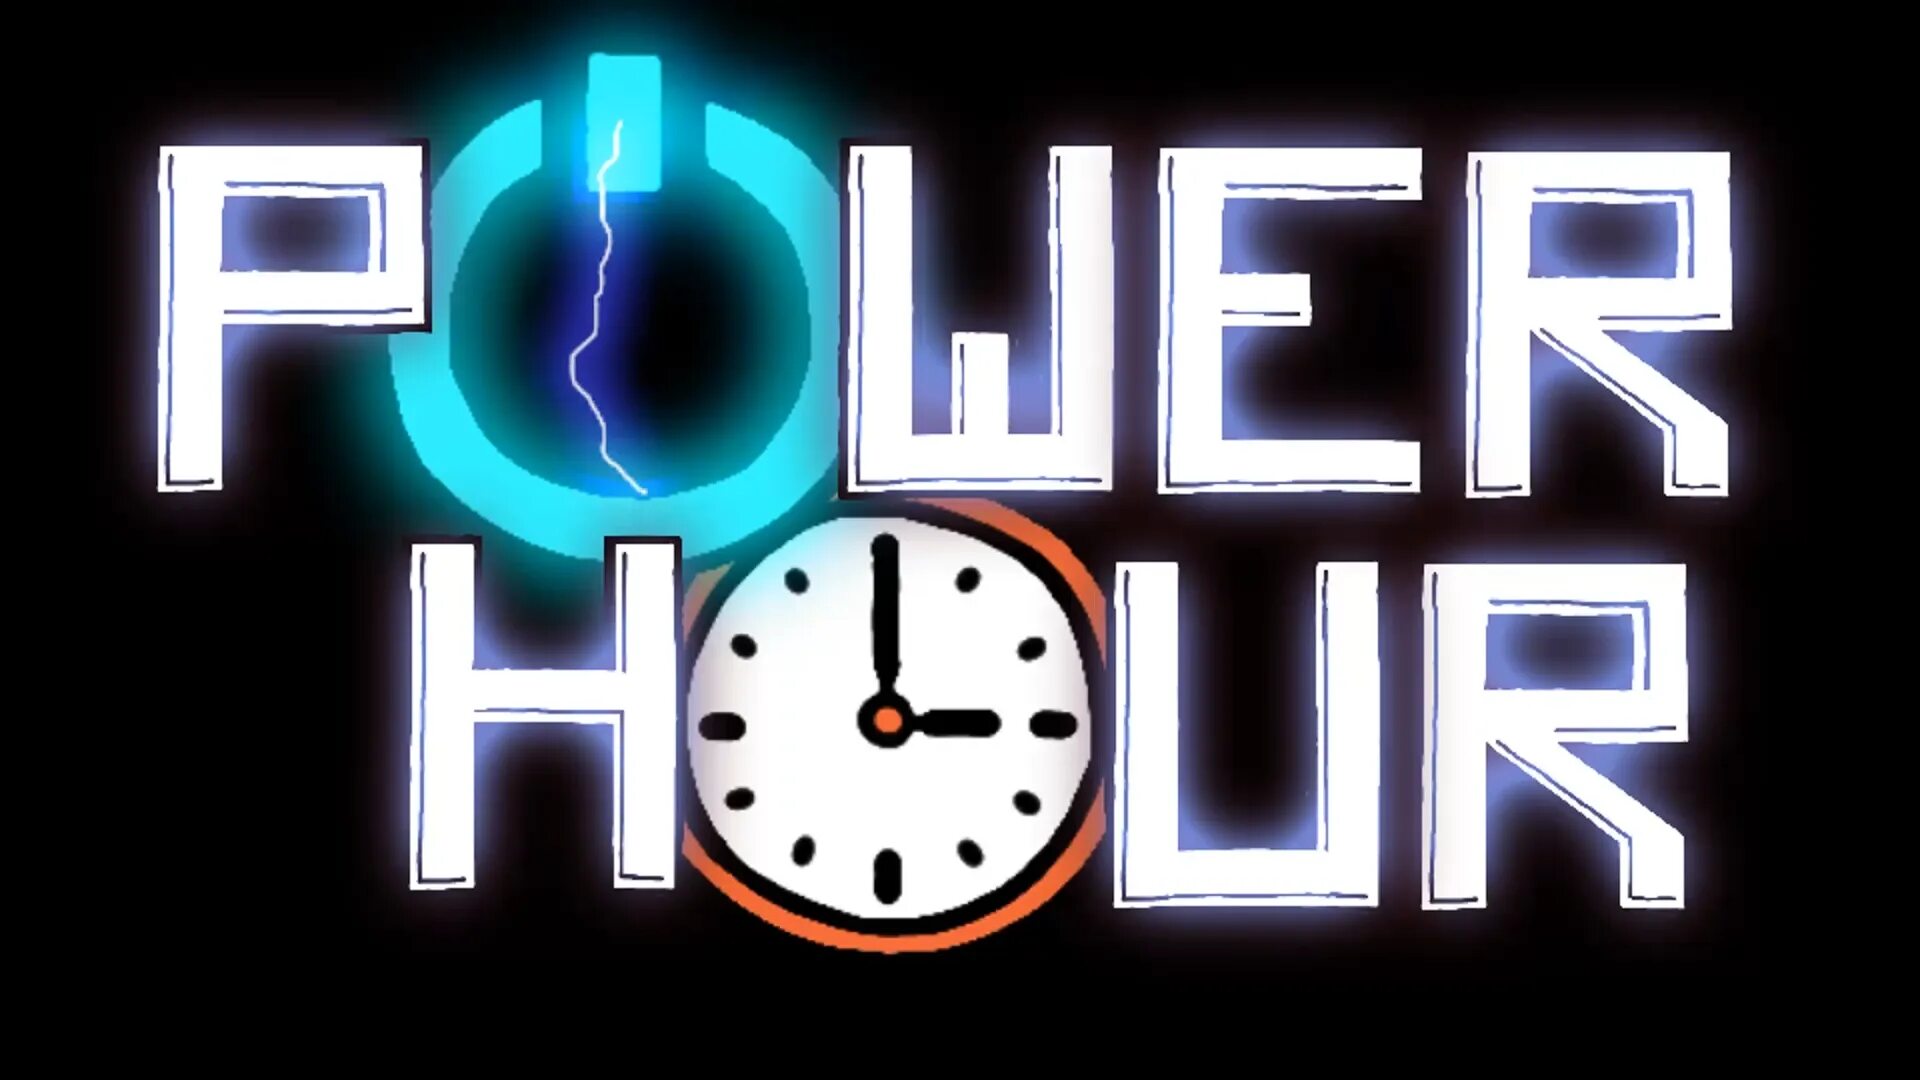 Power hour. Power hour 2003. Power hour Music. Power hour #1 read. Short hour